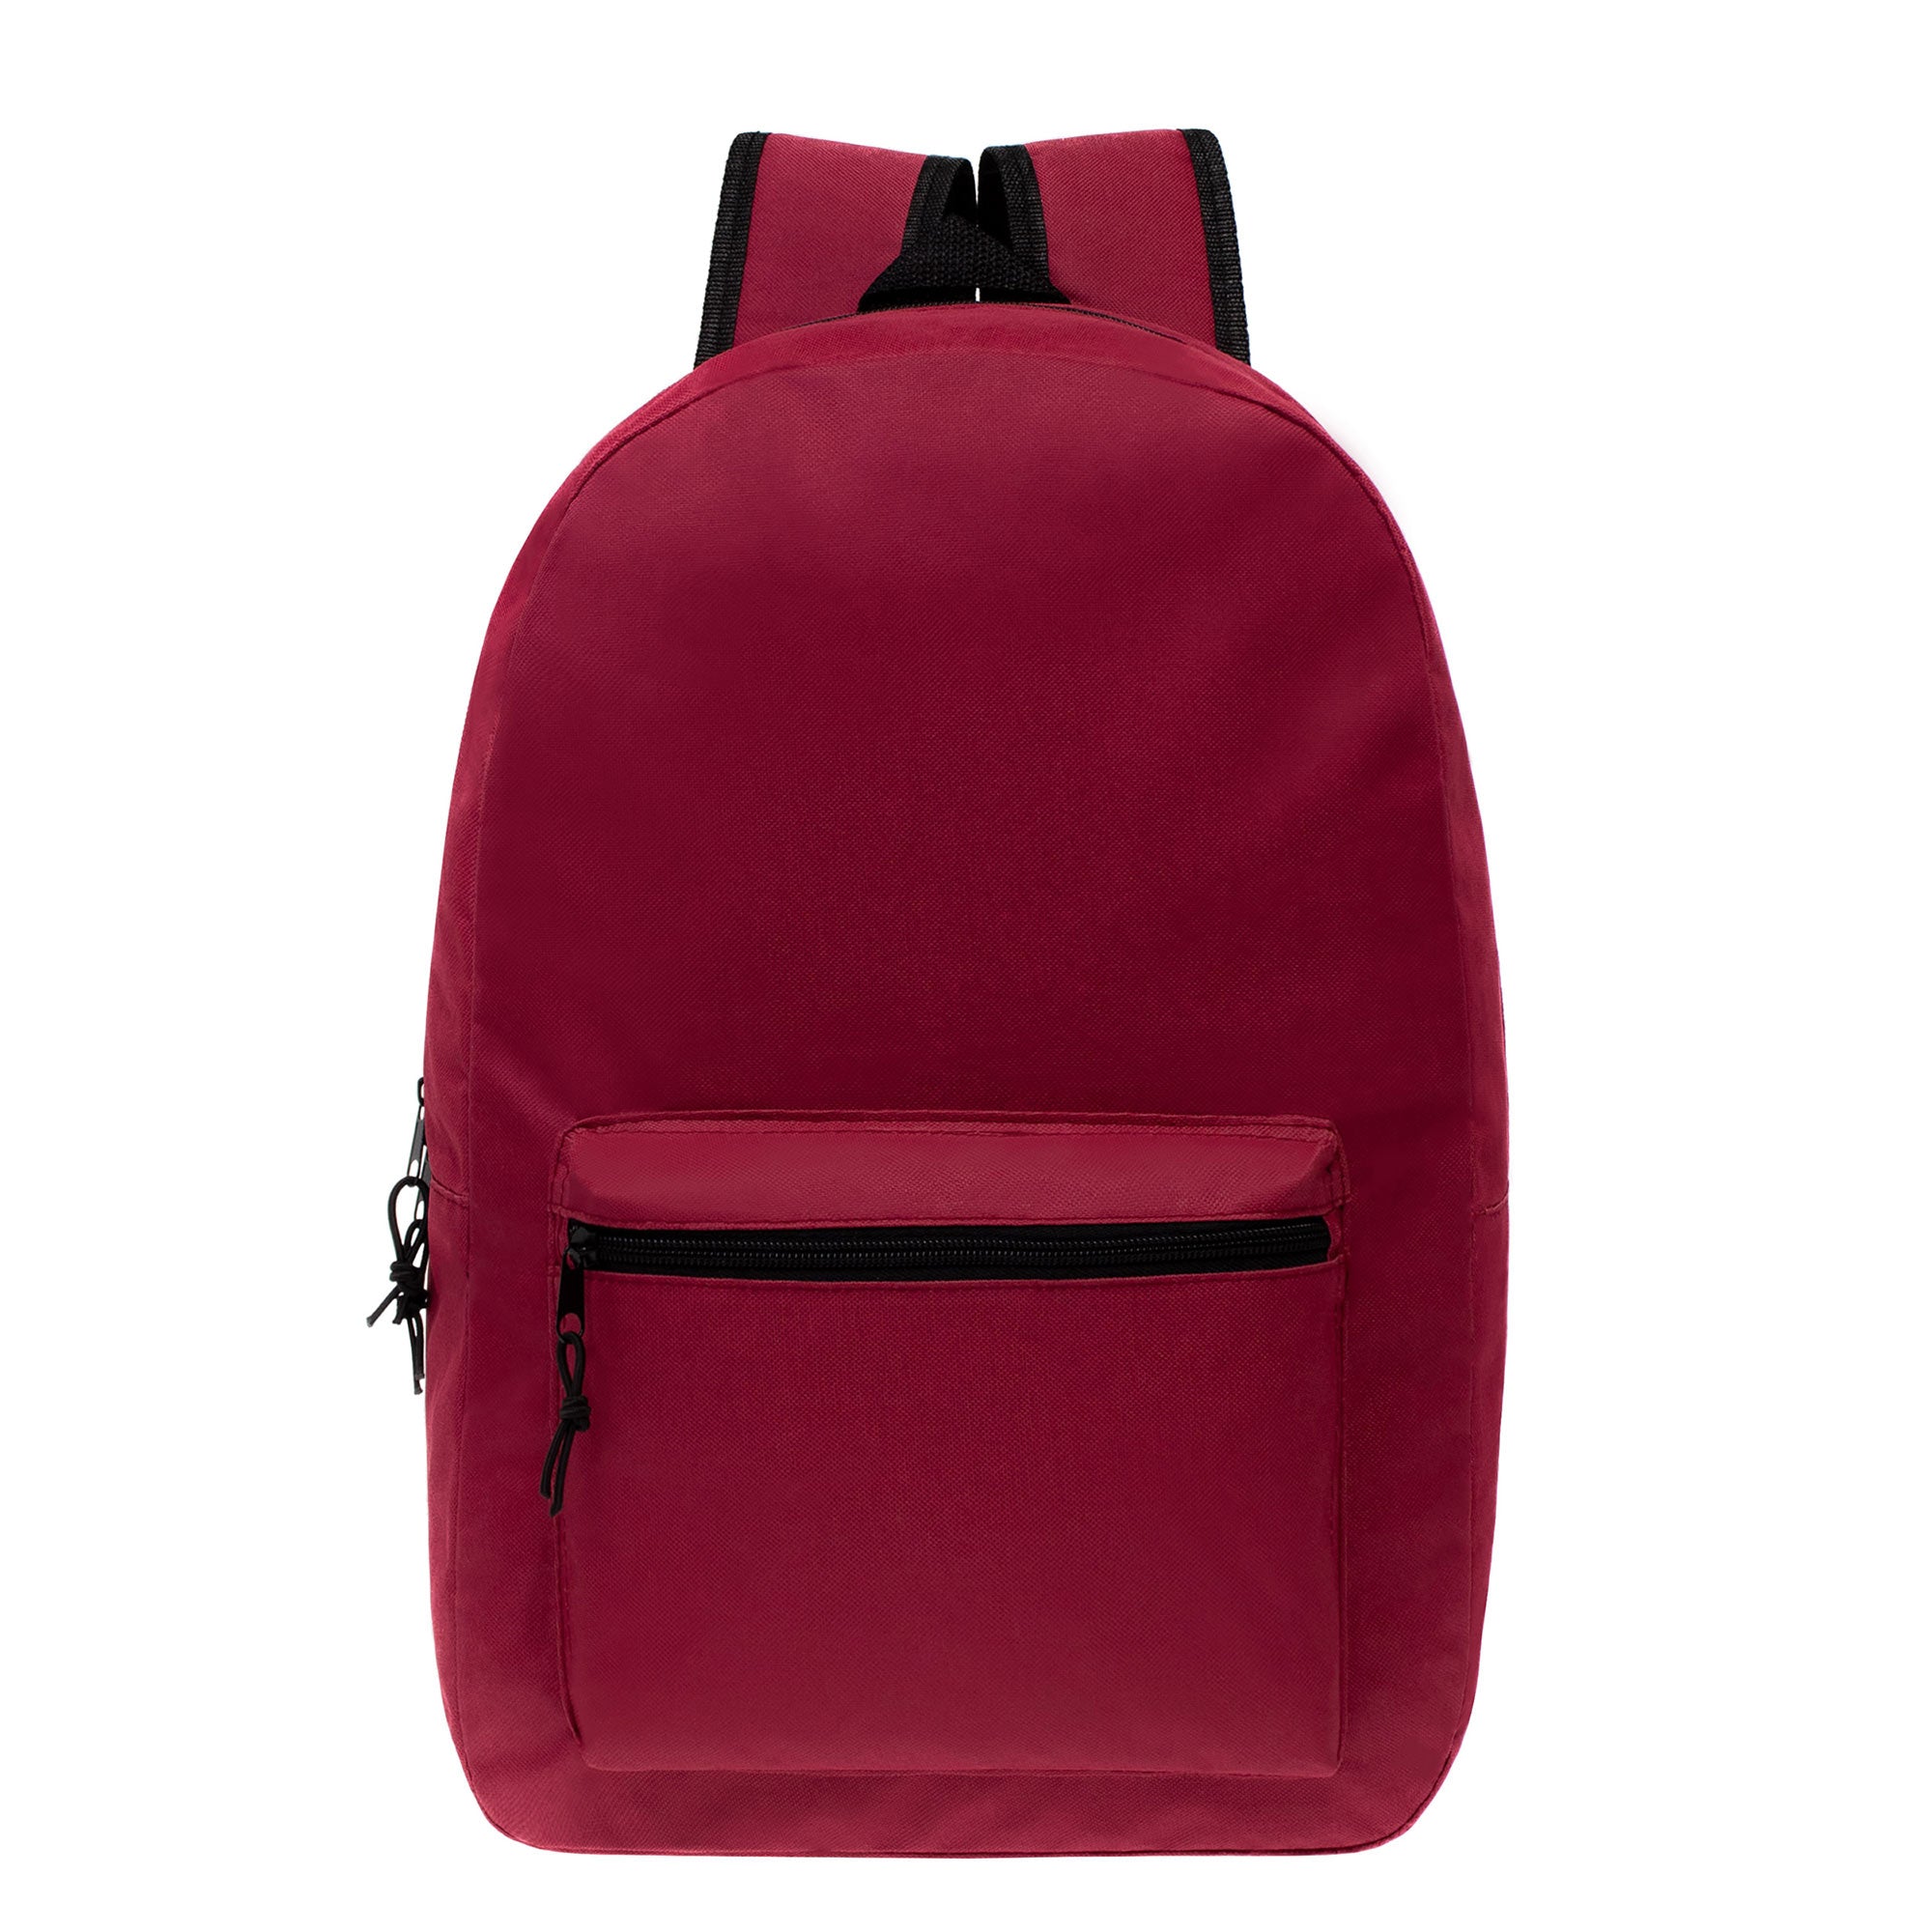 15 inch solid color basic wholesale backpacks